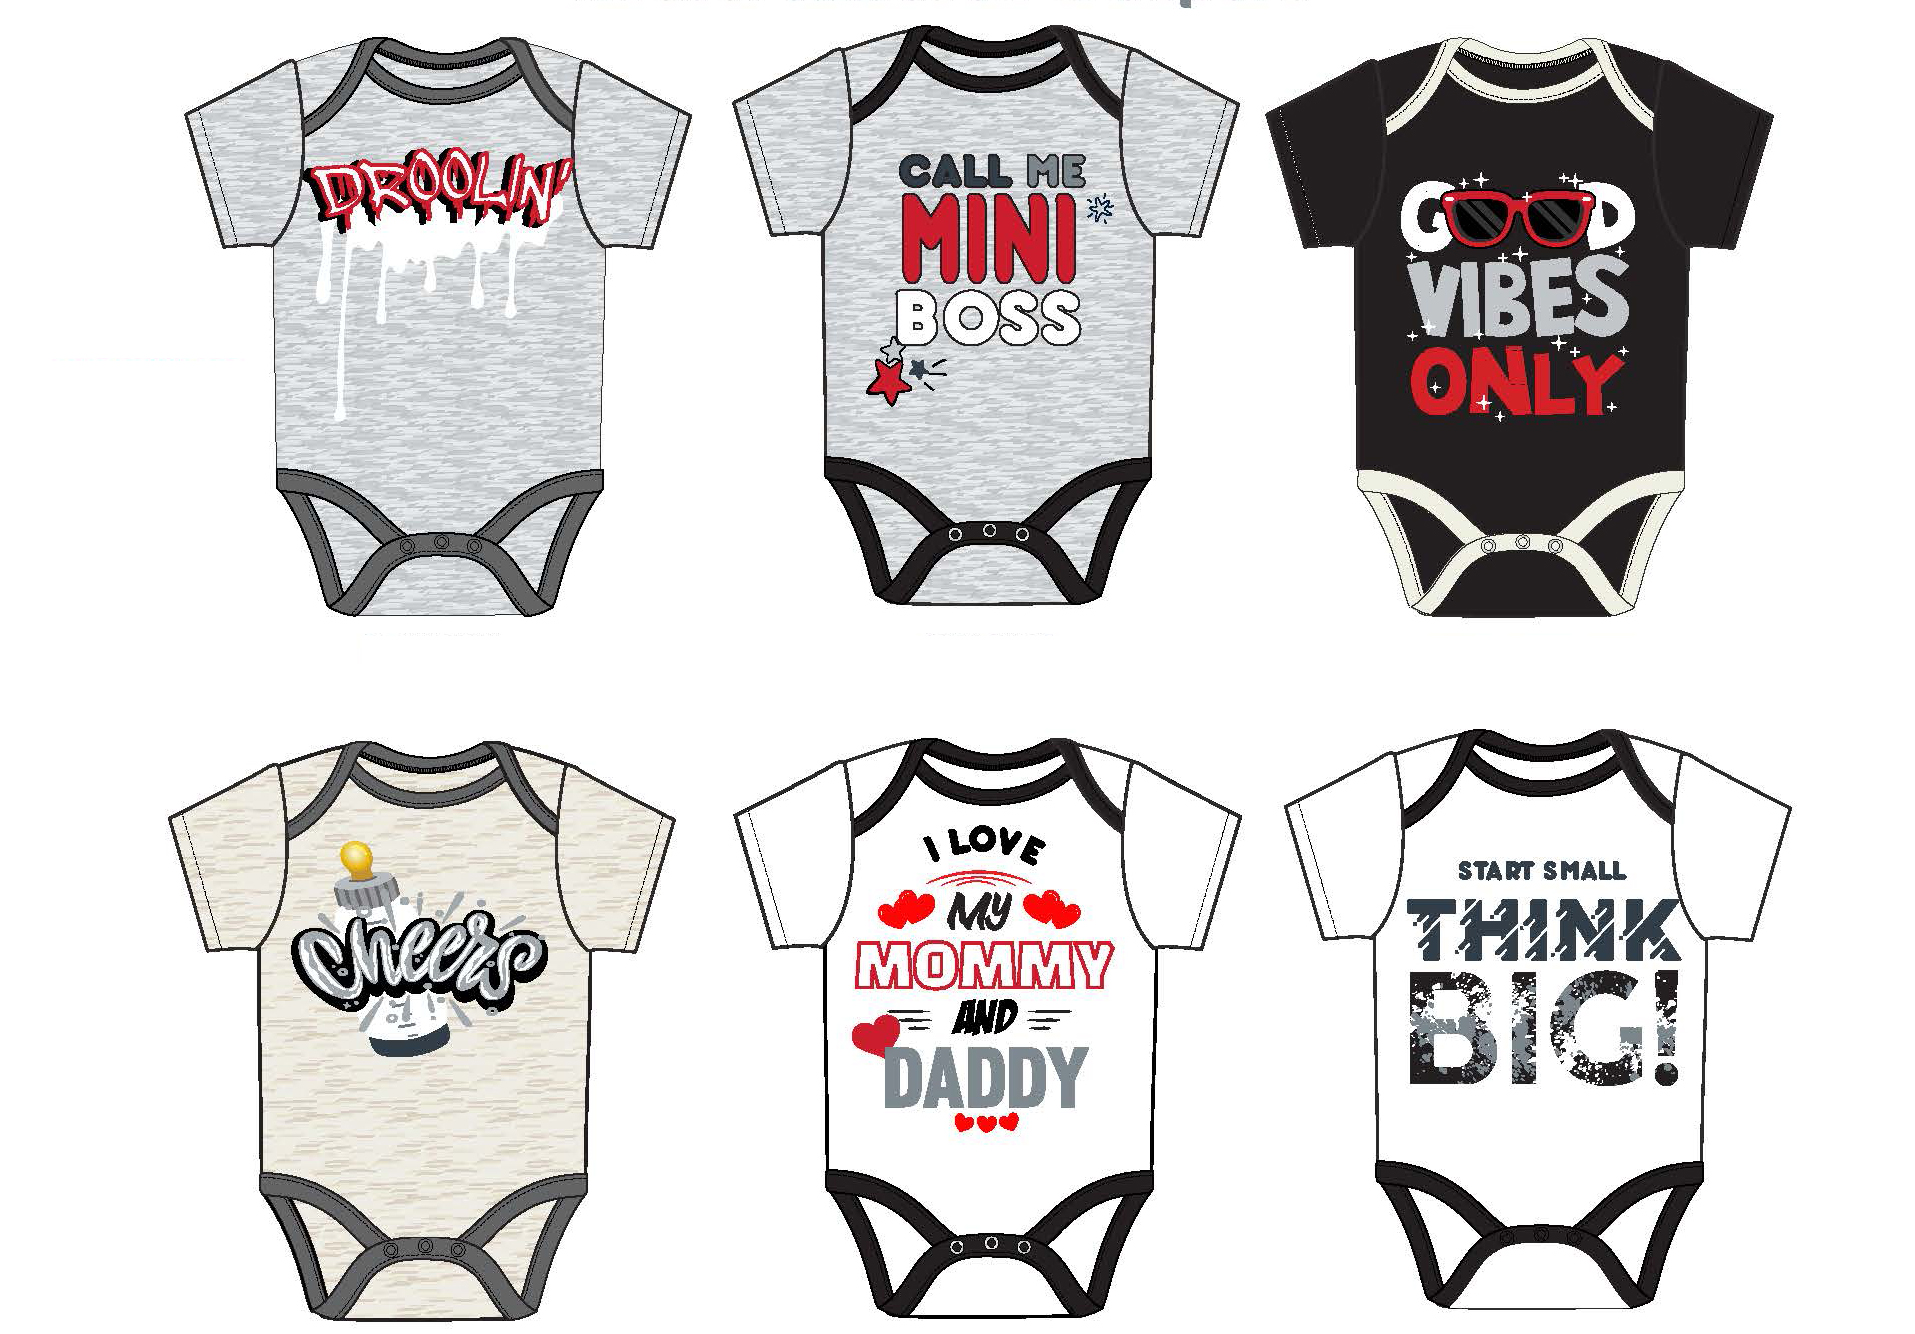 Gender Neutral Short-Sleeve Graphic Baby Onesies w/ Boss & Vibe Print